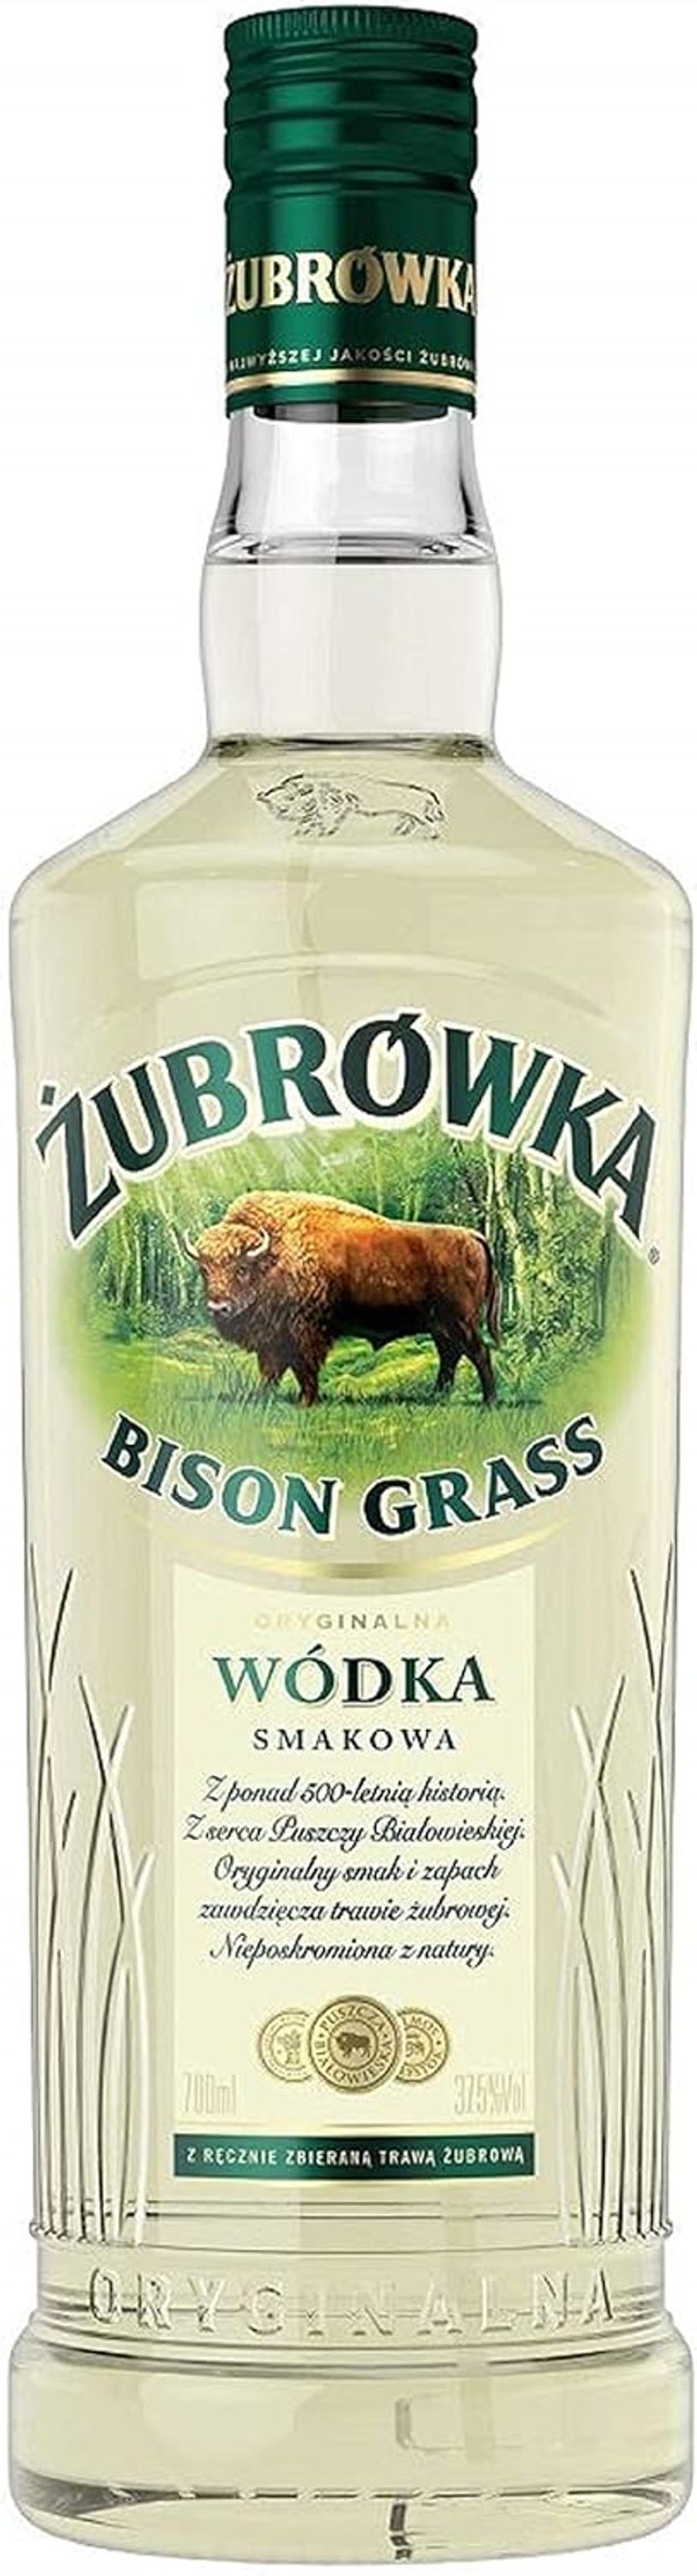 Grasovka Bisongrass Vodka 0,7l, alk. 38 tilavuusprosenttia, vodka, Puola